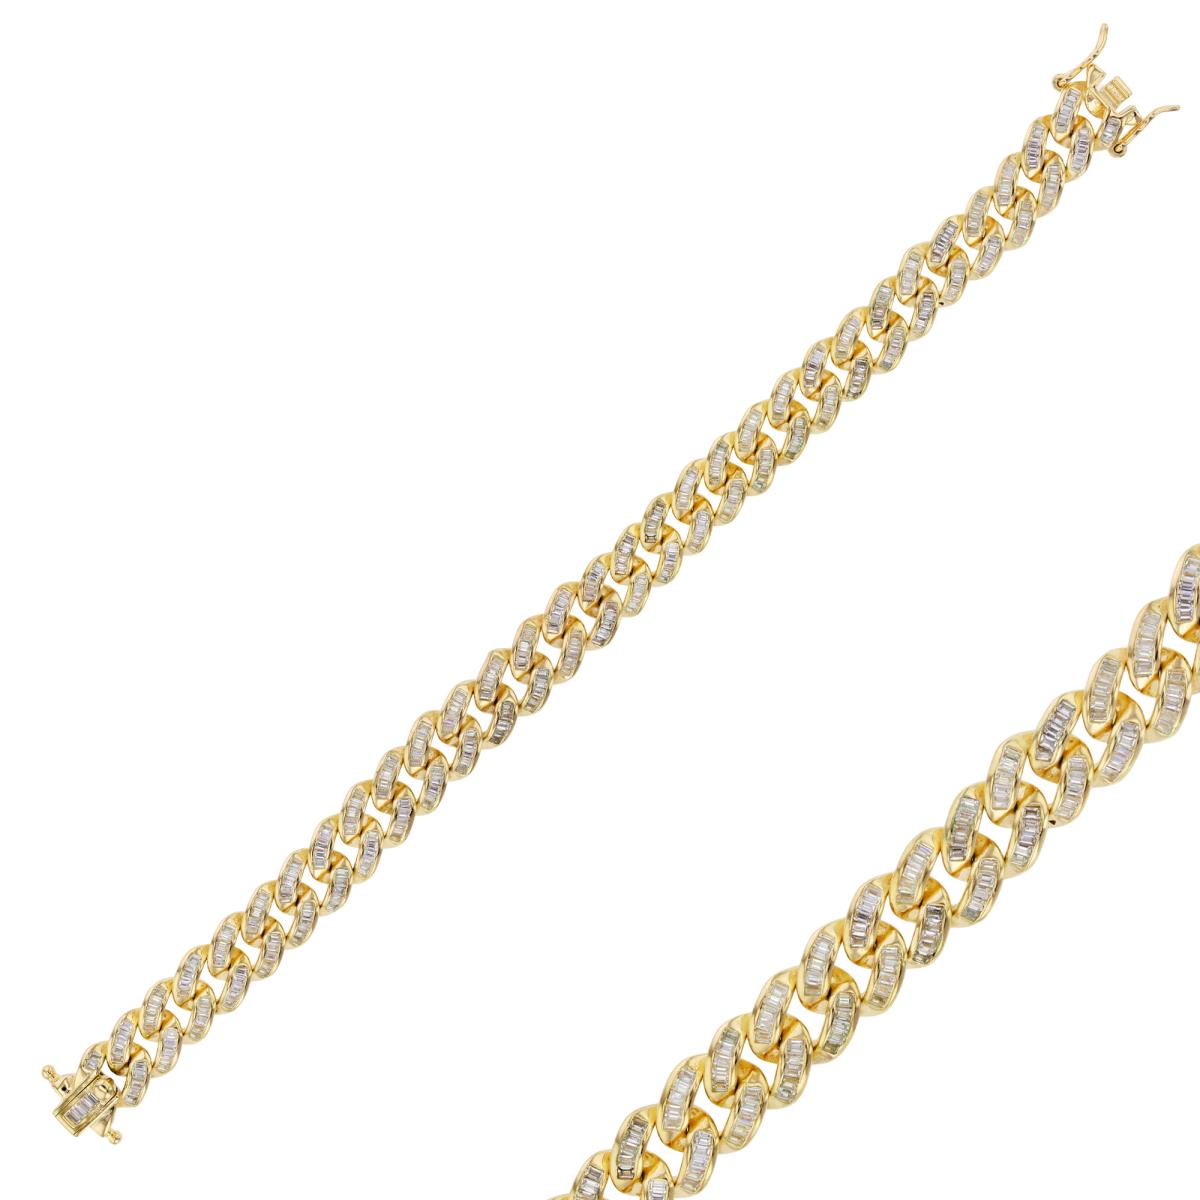 ESTIMATED- 14K Yellow Gold 2.6CTTW Diamonds 9.30mm 7.5" Hollow Miami Cuban 250 Chain Bracelet with Box Lock